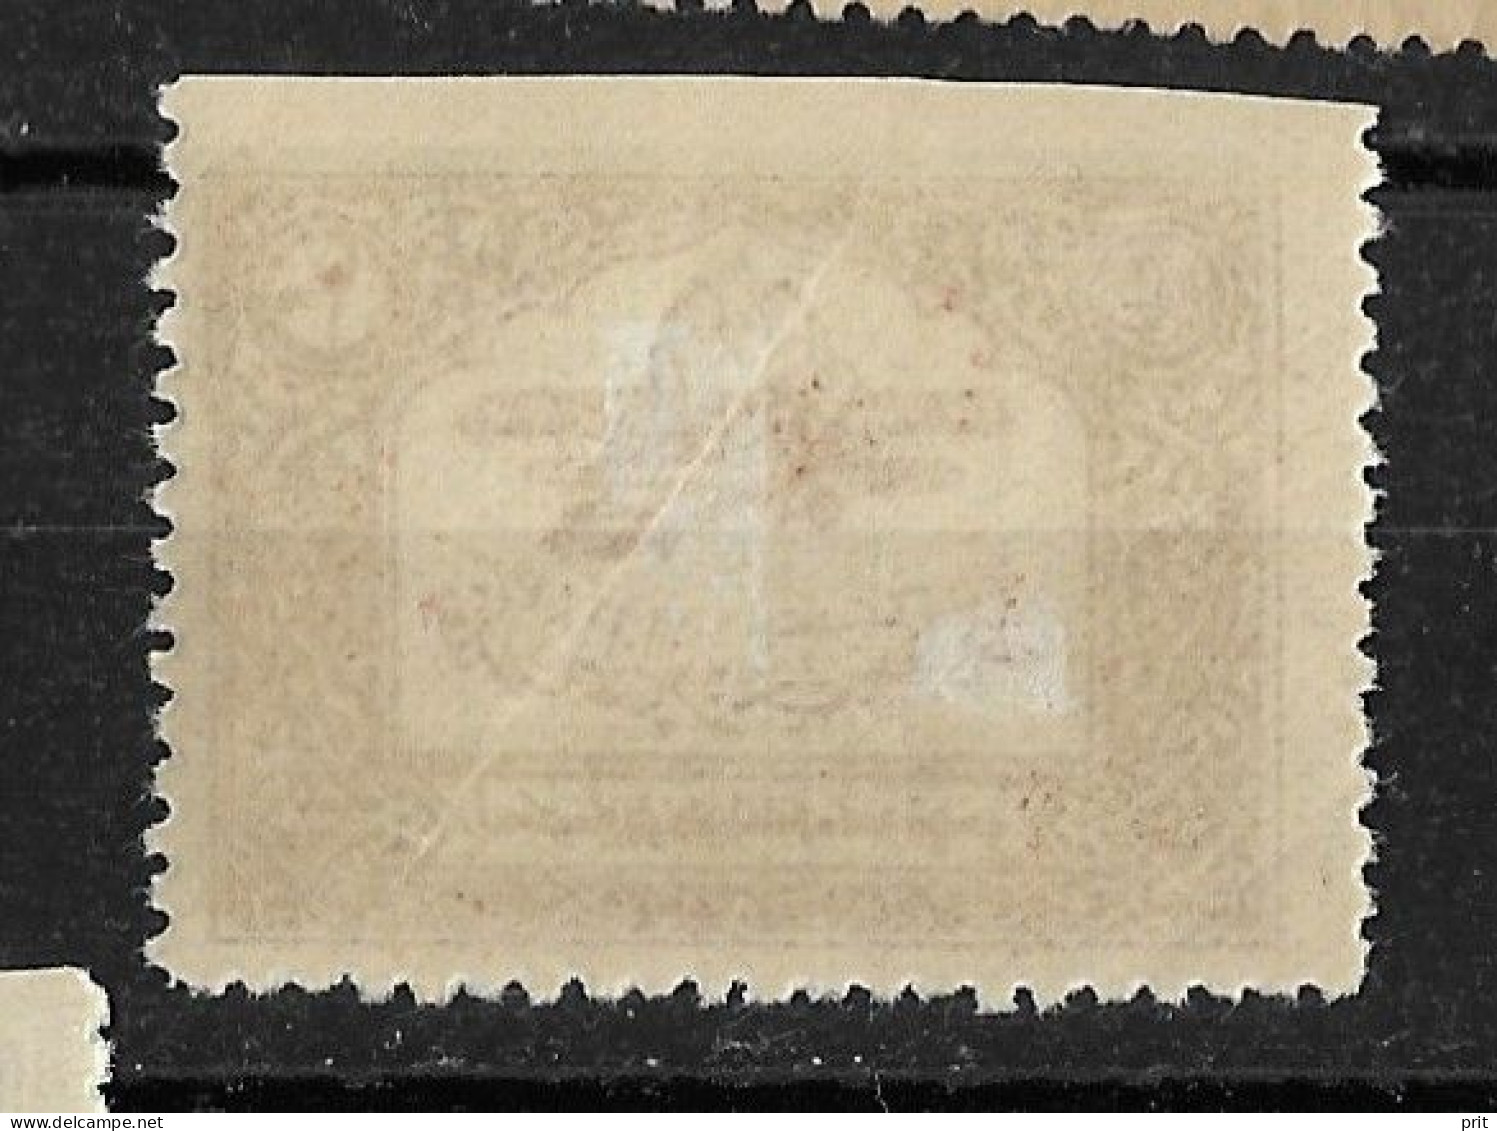 Turkey 1926 20Para Biplane, Postal Tax Air Fund/ Air Post Stamp. Mi 1/Sc RAC1 - Unused Stamps